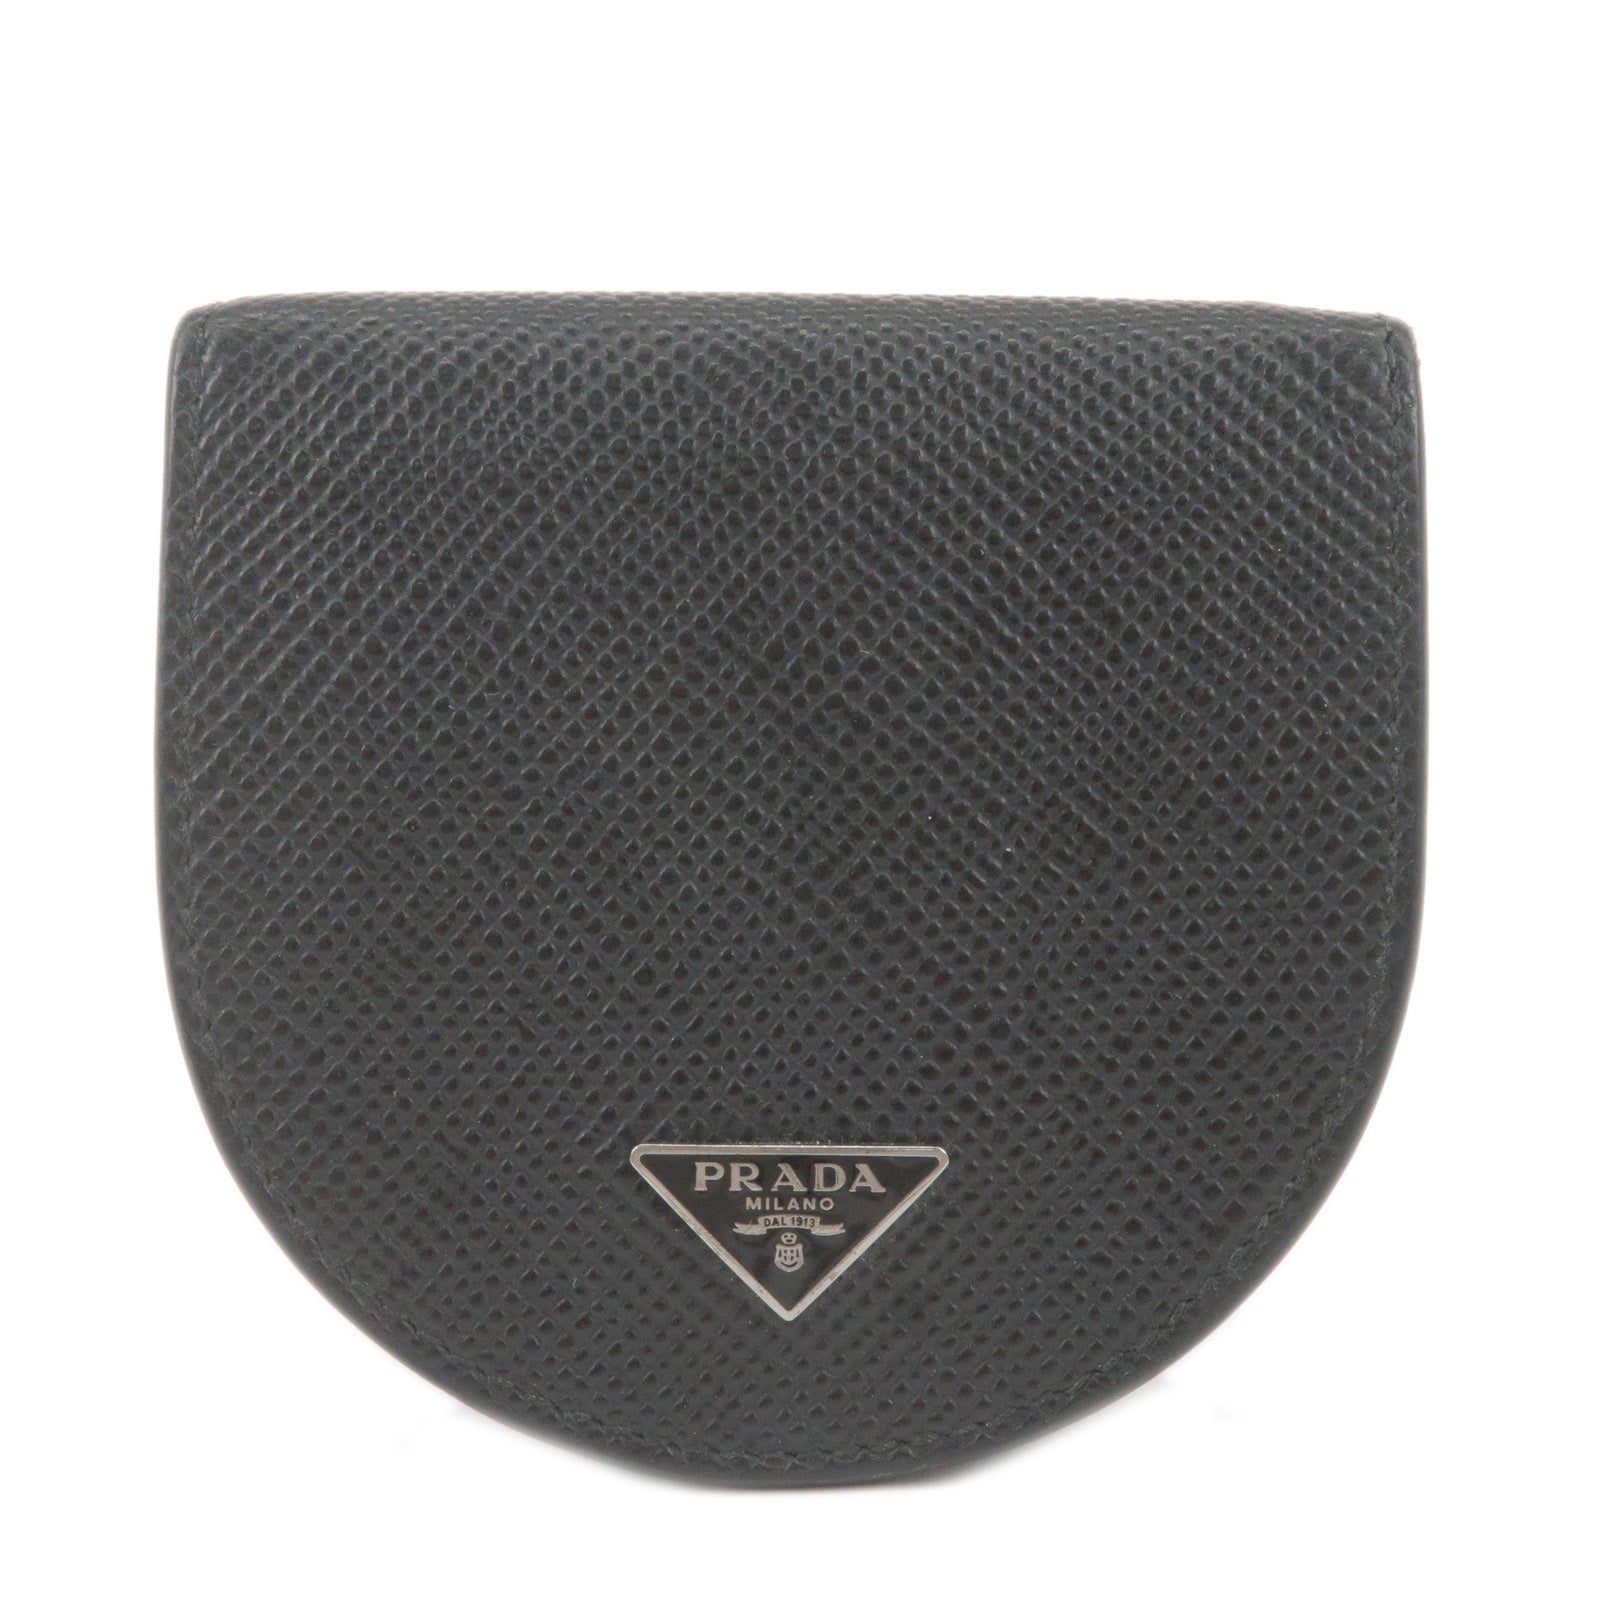 PRADA-Logo-Leather-Coin-Case-Mini-Wallet-Black-Silver